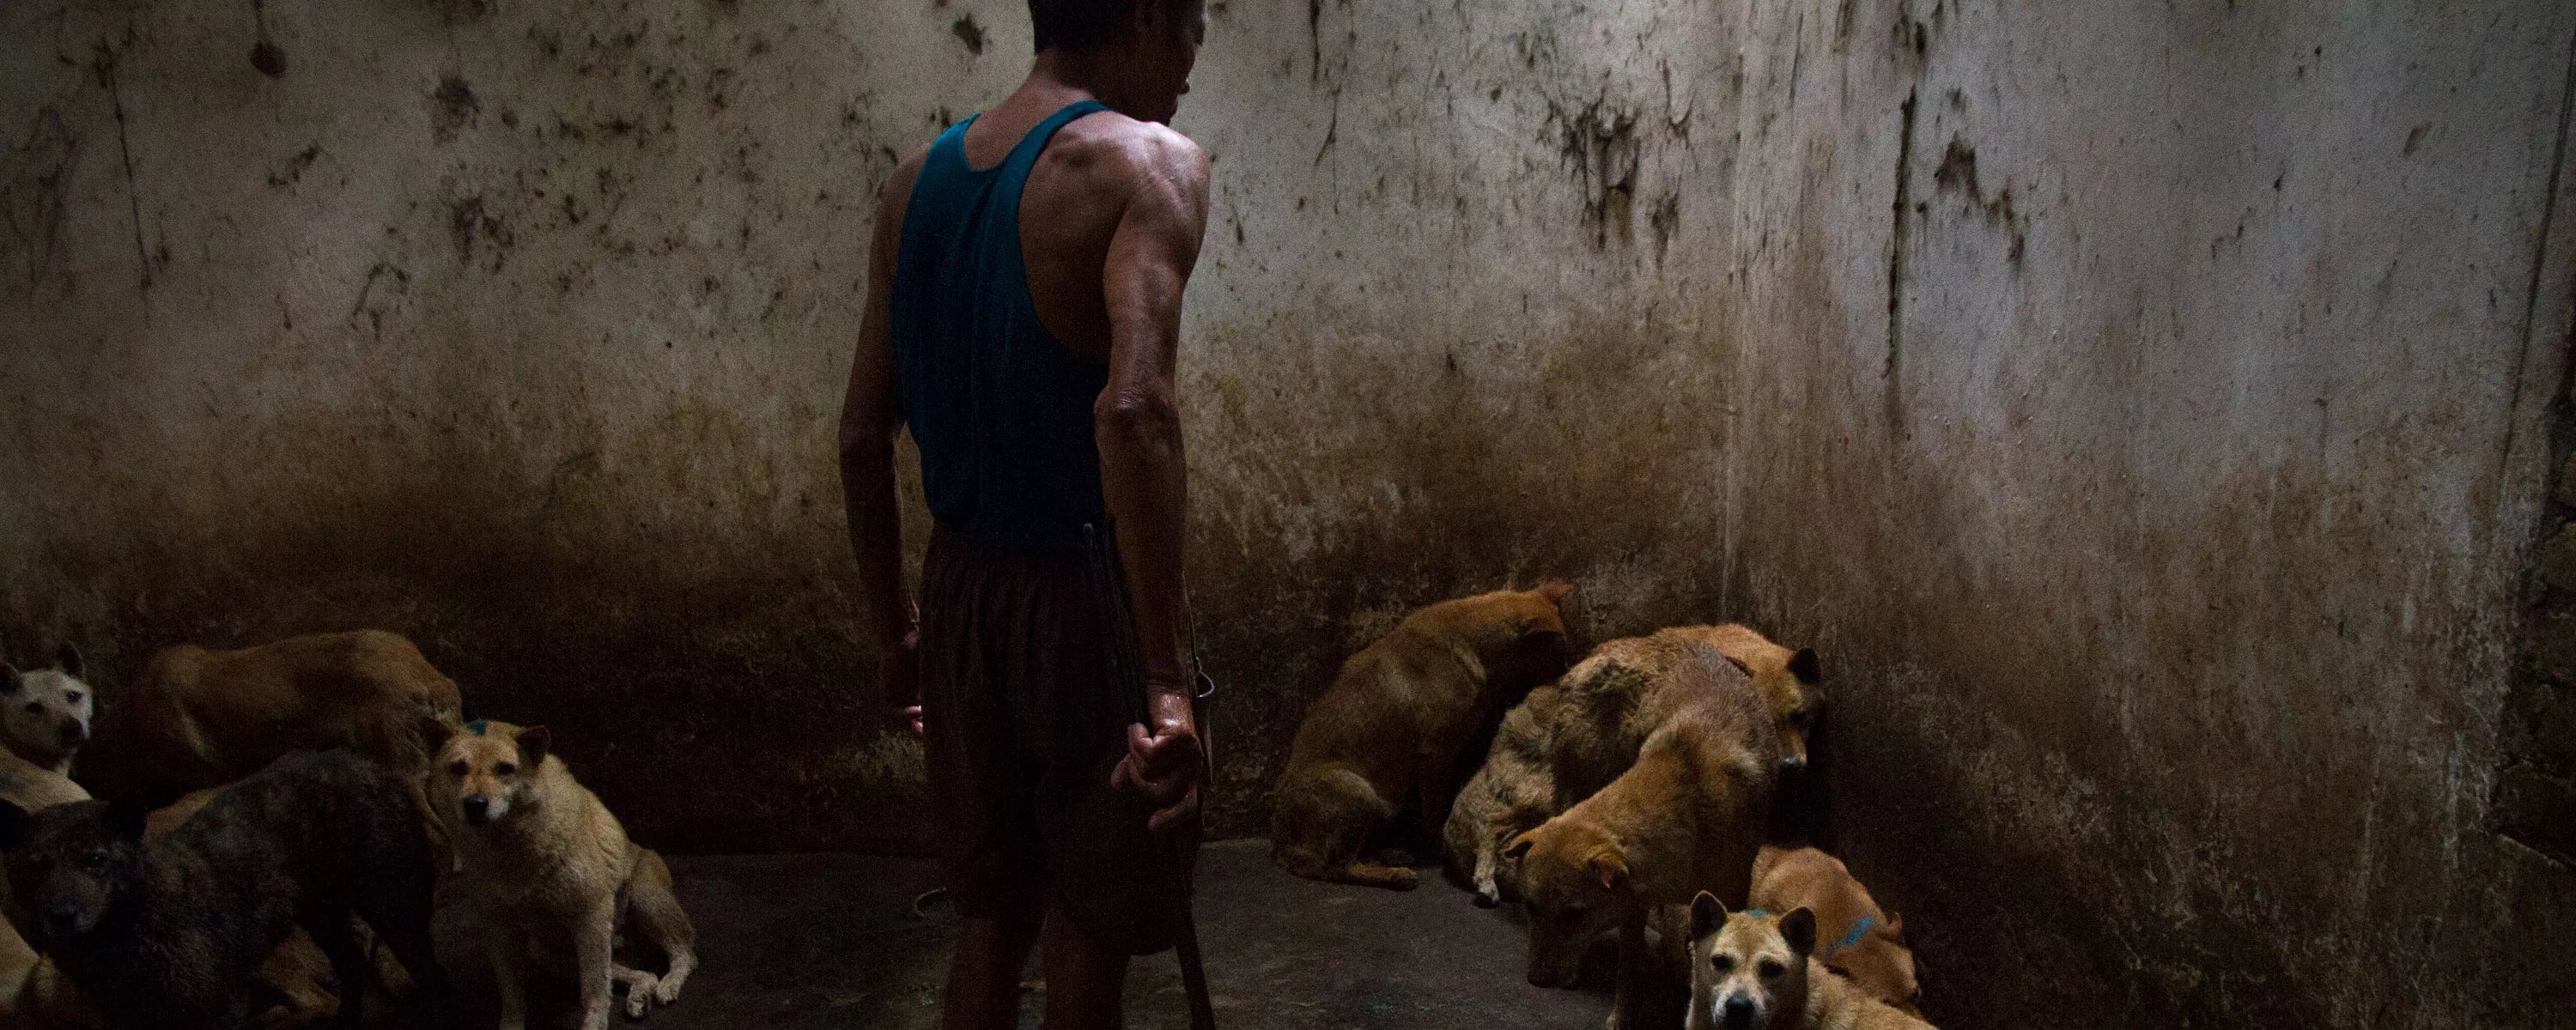 Matarife de perros en China, amenaza a varios perros en una sala oscura